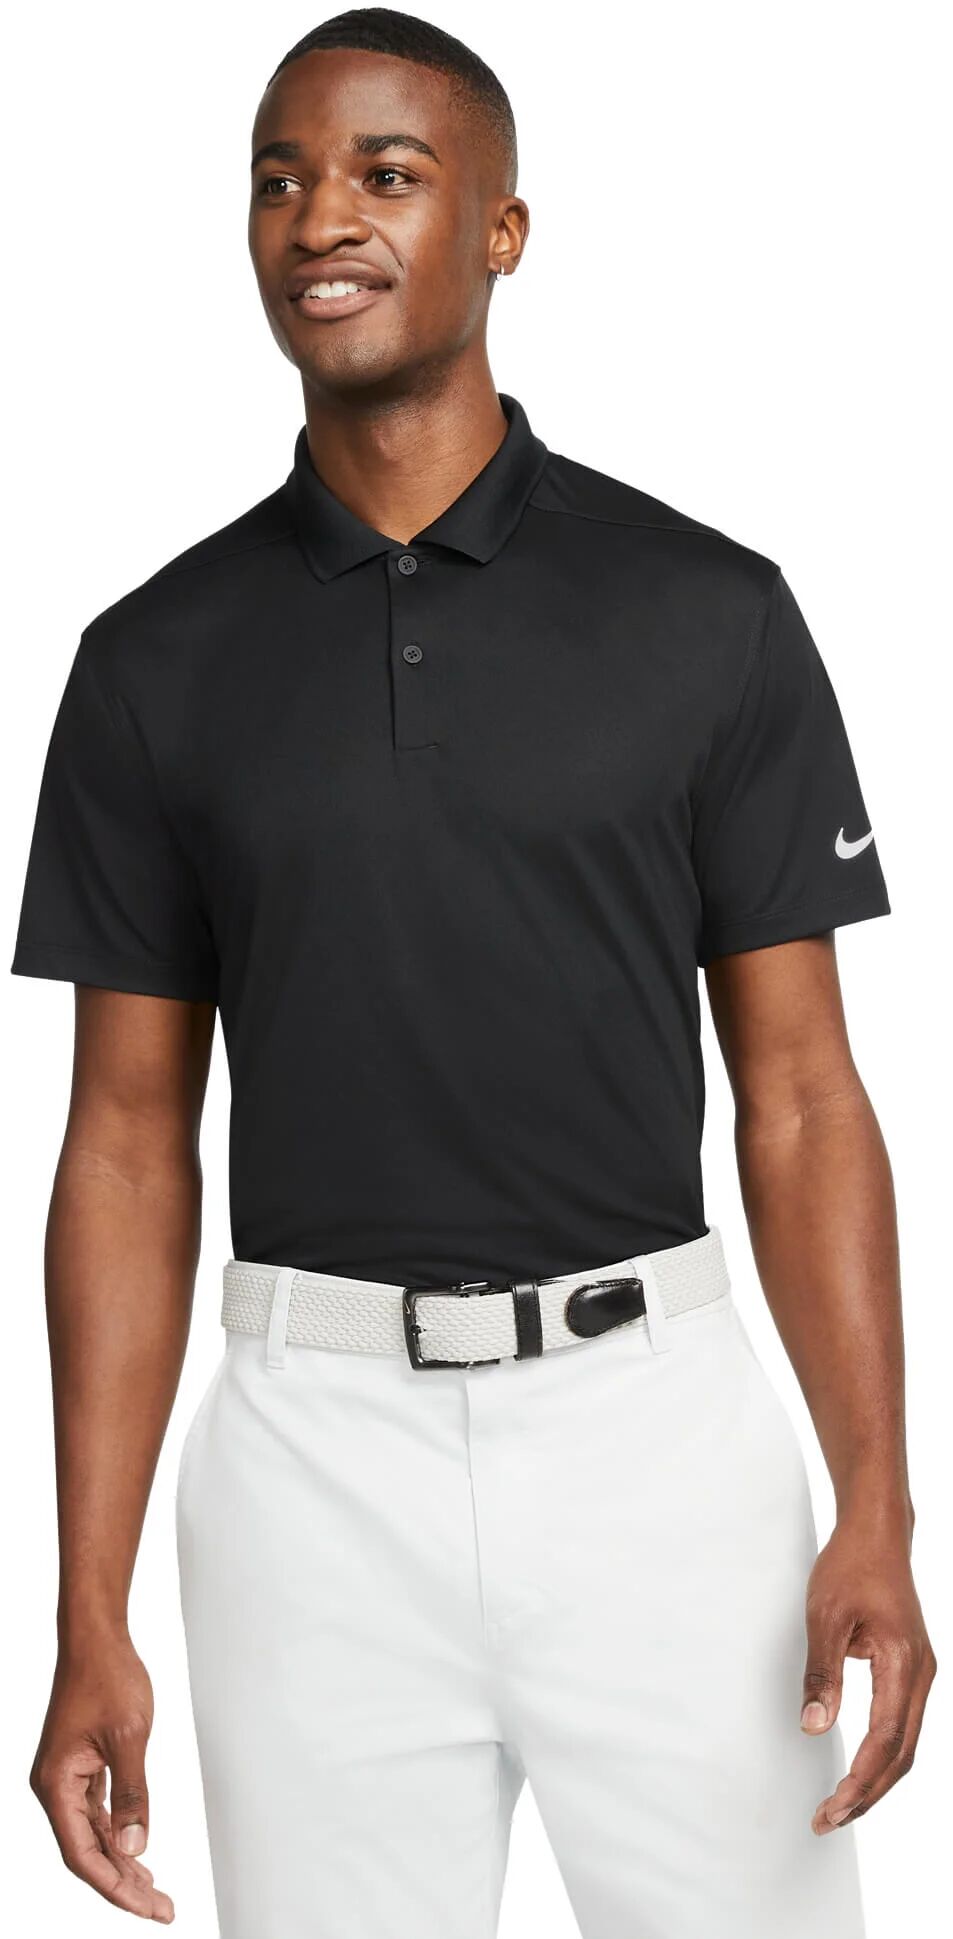 Nike Dri-FIT Victory Men's Golf Polo Shirt - Black, Size: Large